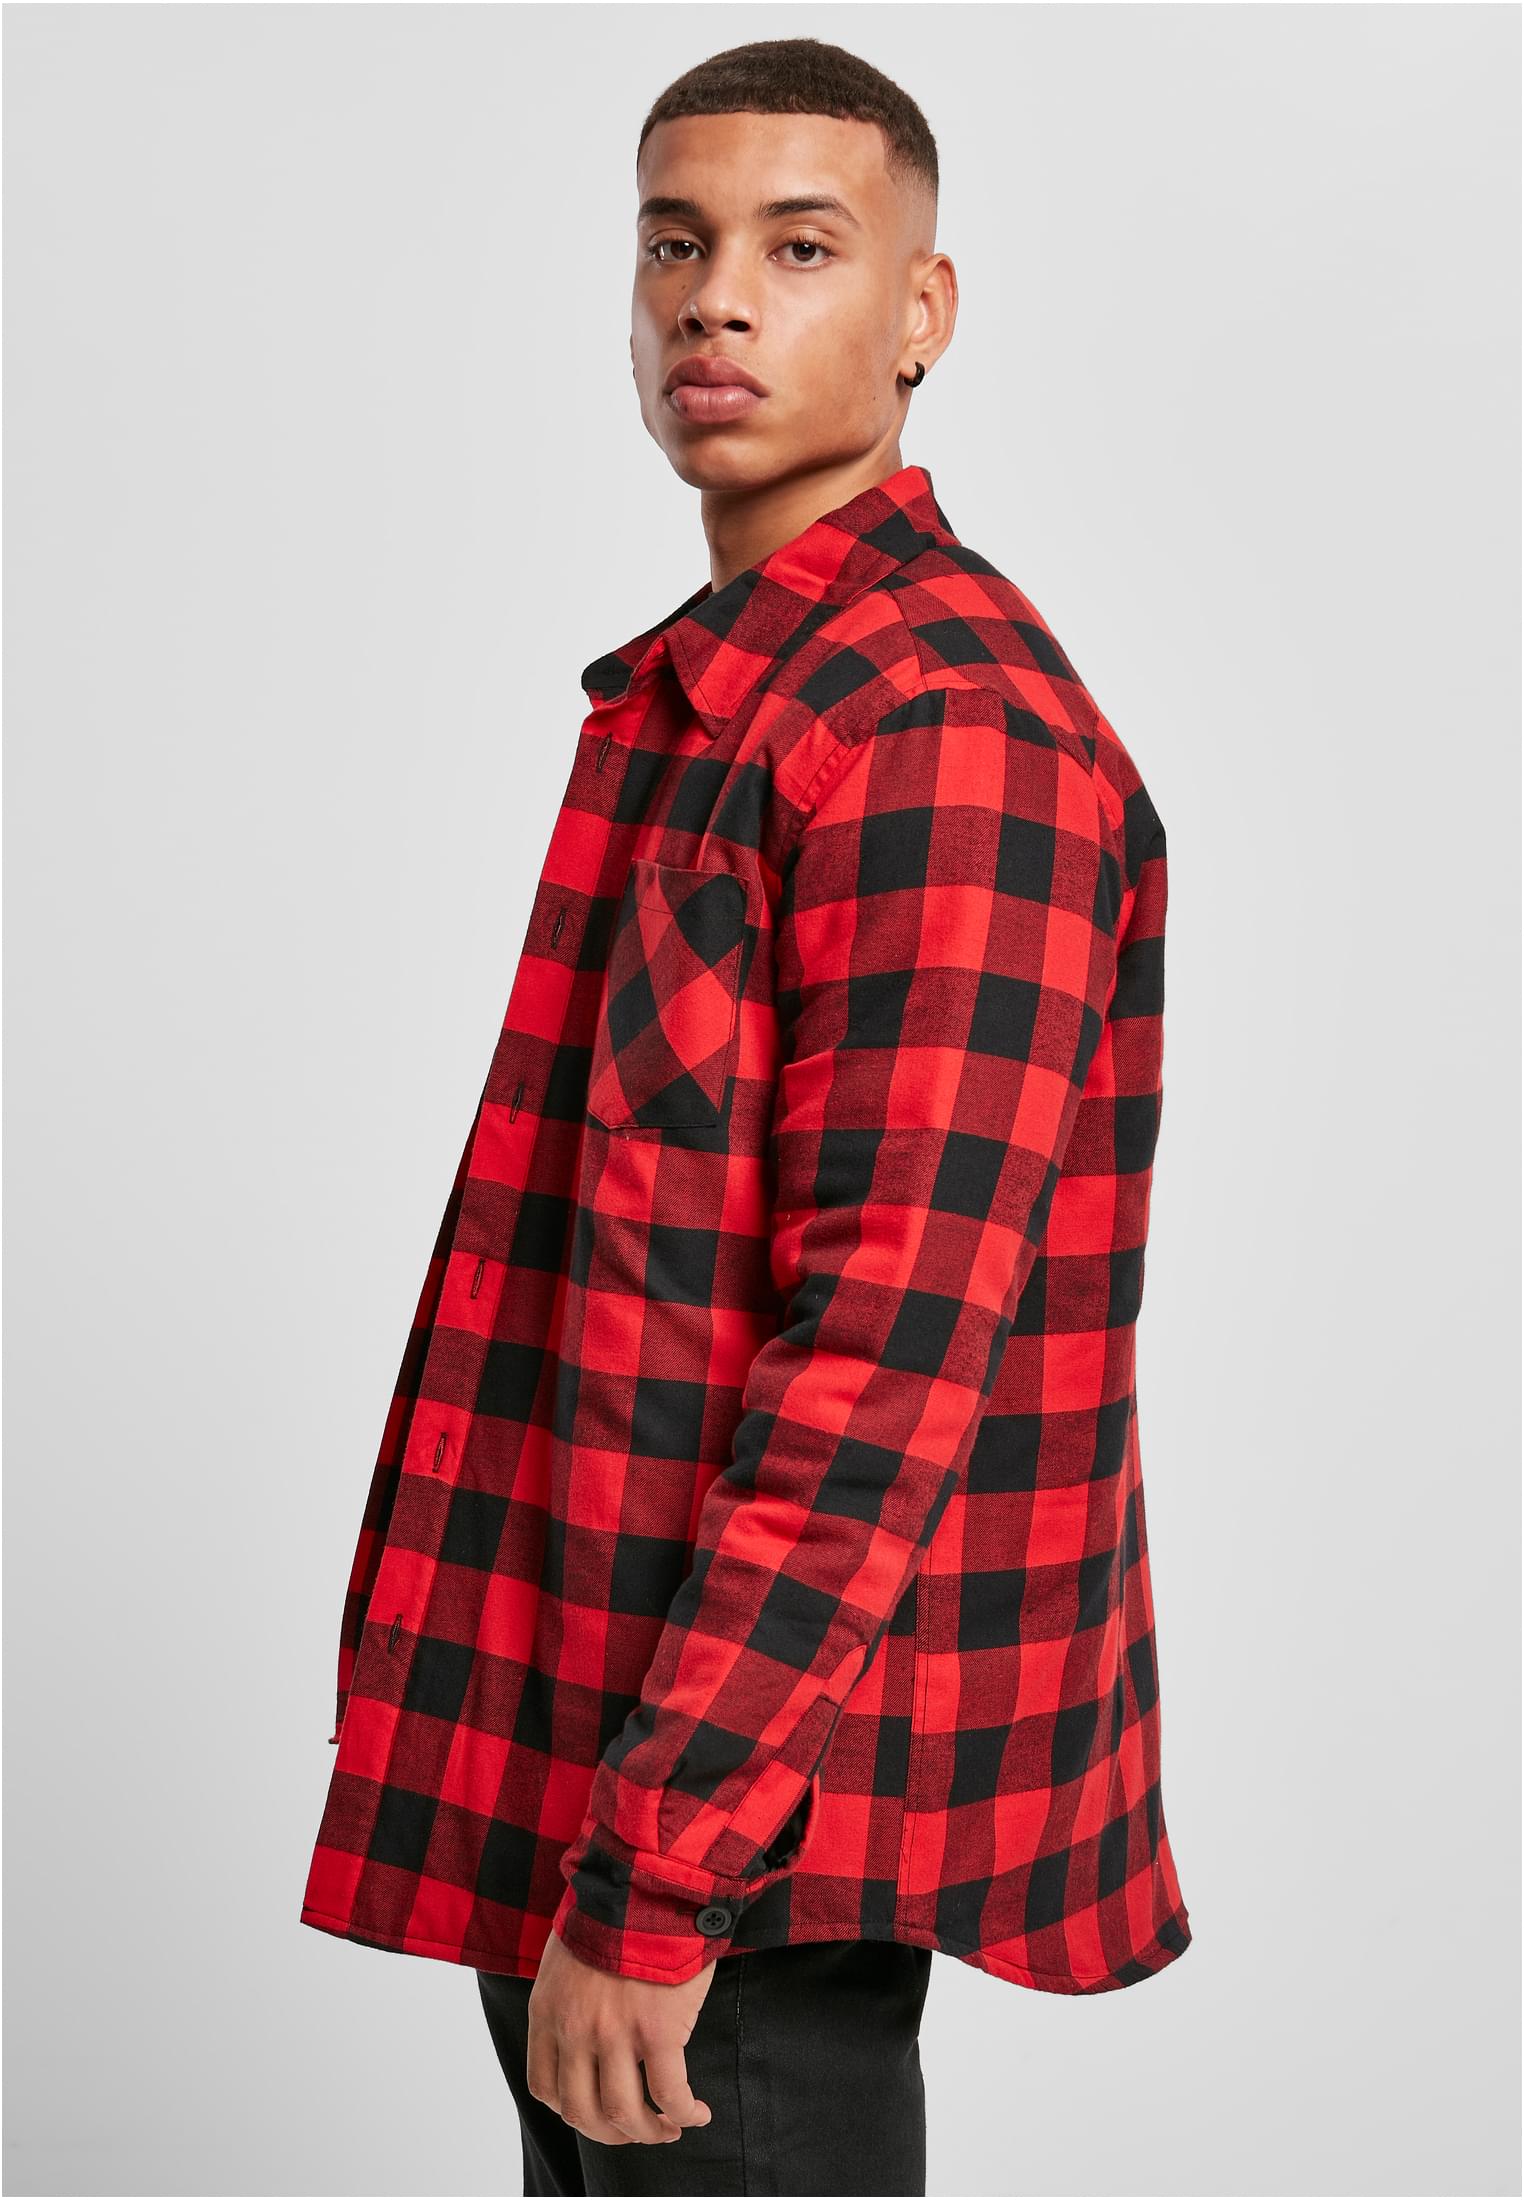 Hemden Padded Check Flannel Shirt in Farbe black/red